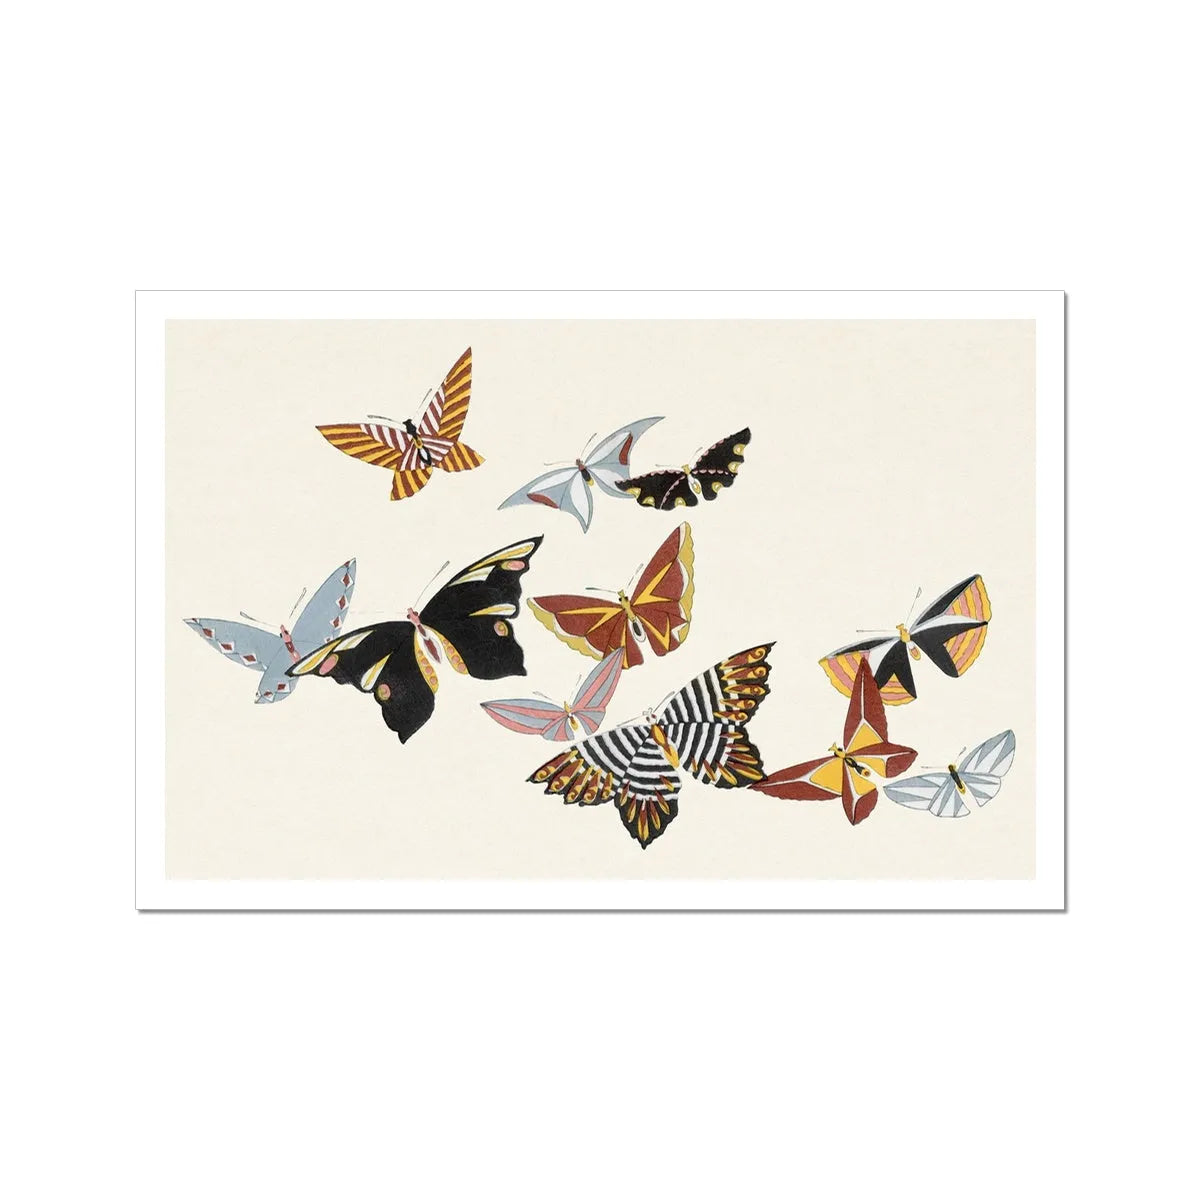 Japanese Butterflies By Kamisaka Sekka Fine Art Print - 24’x16’ - Posters Prints & Visual Artwork - Aesthetic Art